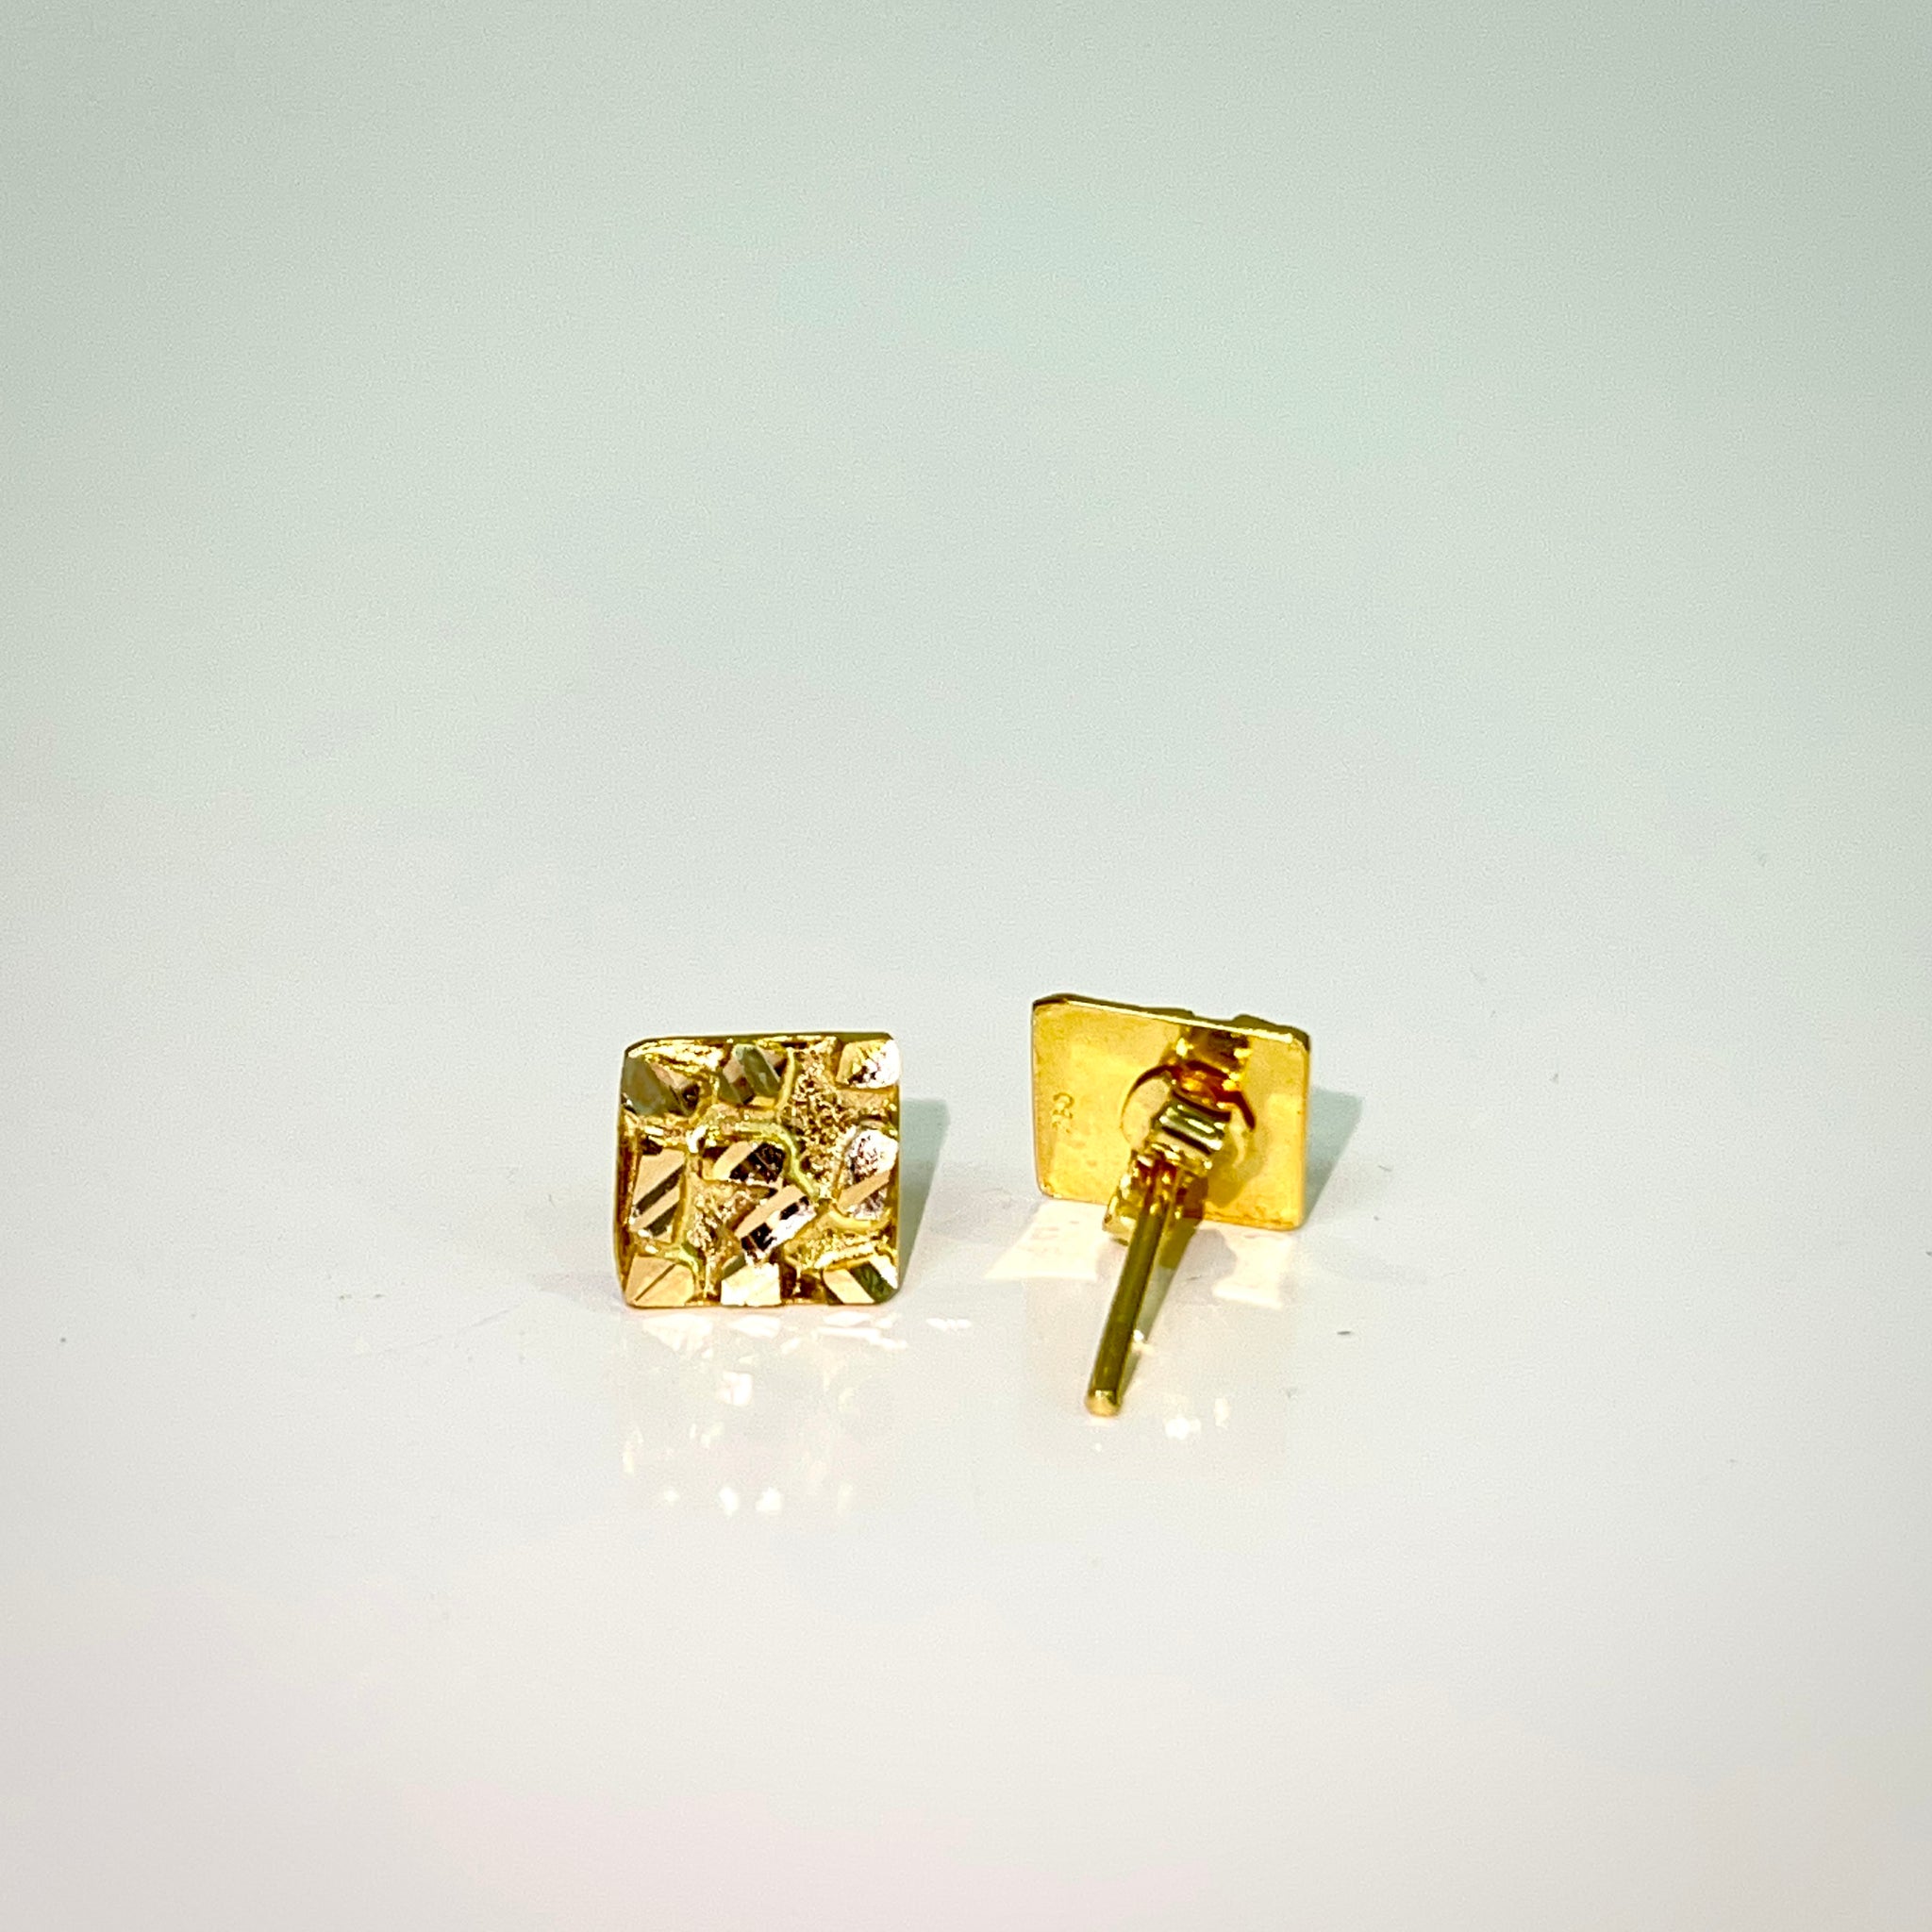 Piet Piet Earrings - 14 carat gold